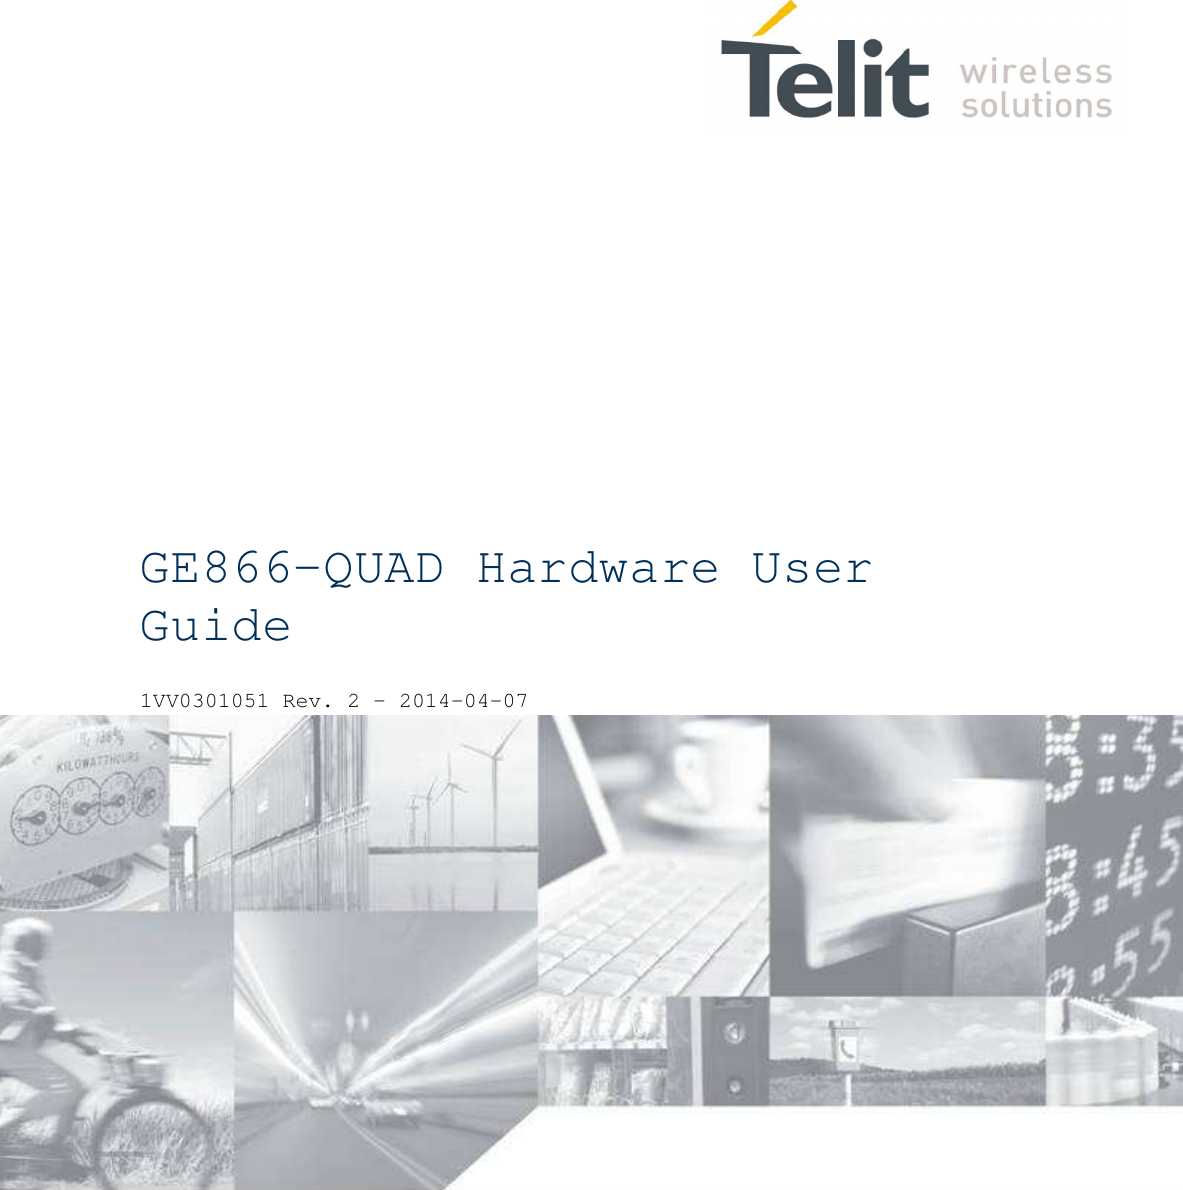                     GE866-QUAD Hardware User Guide 1VV0301051 Rev. 2 – 2014-04-07  